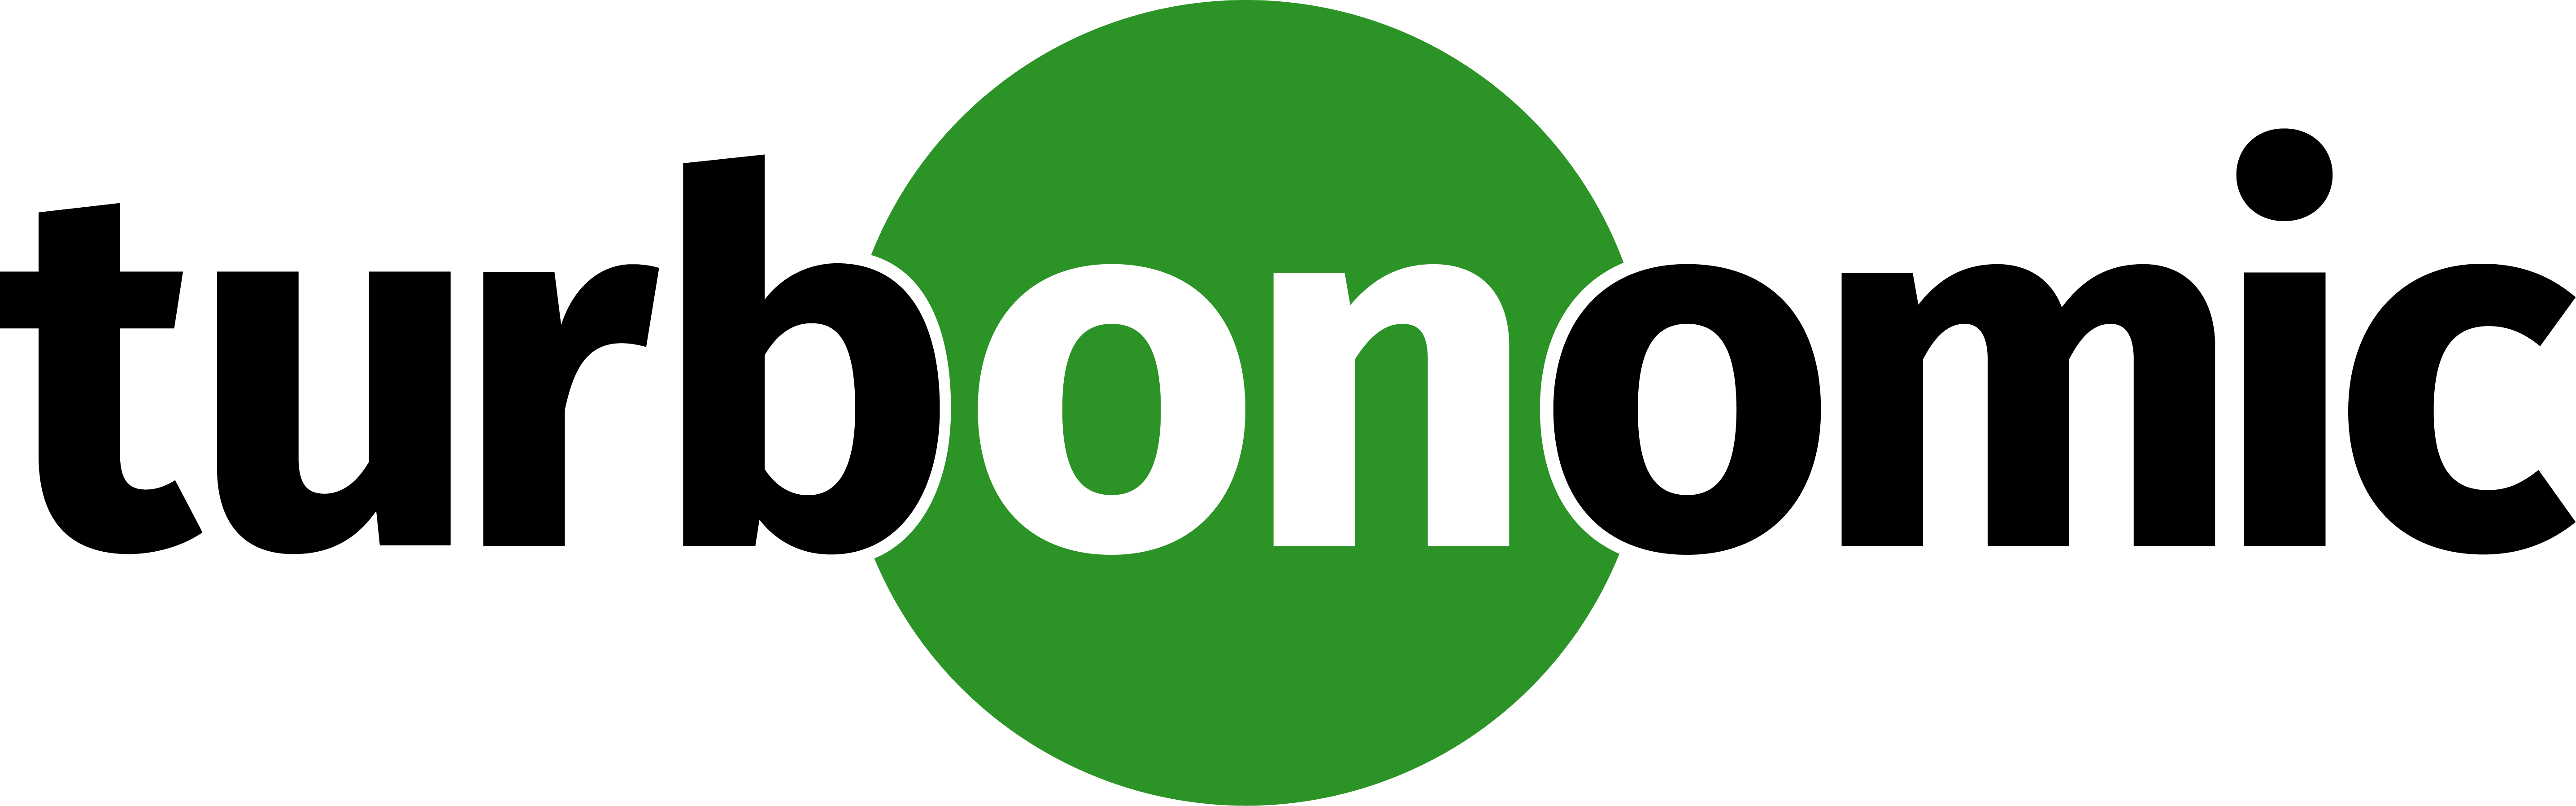 Turbonomic Logo